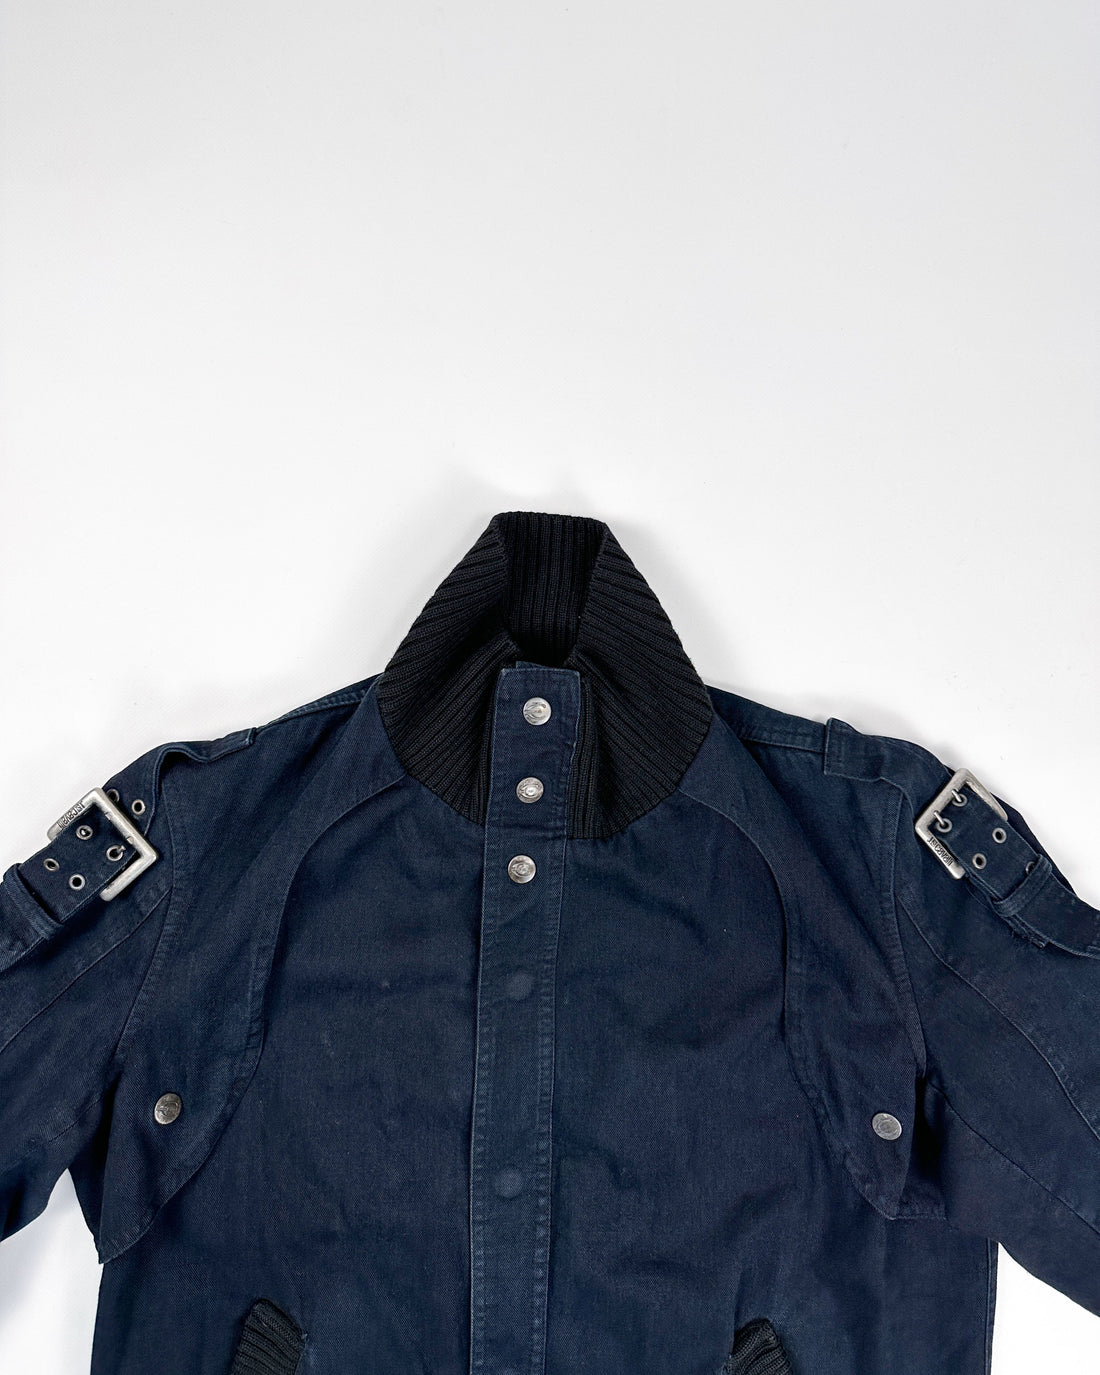 Just Cavalli Navy Blue Belted Jacket 1990's